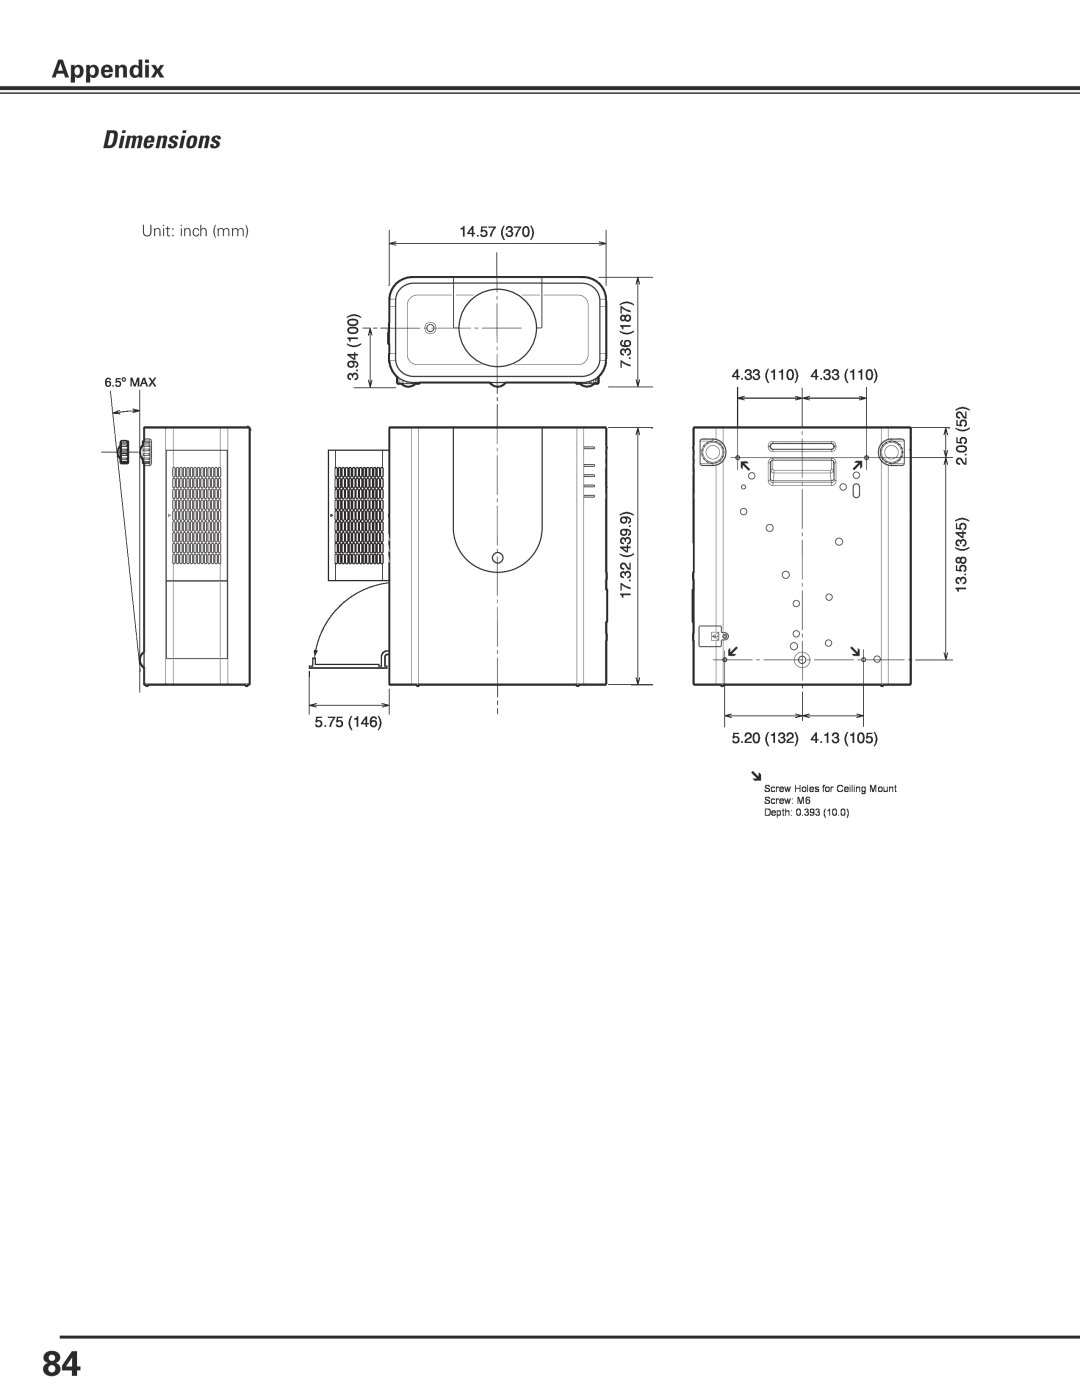 Sanyo PLC-XP200L owner manual Dimensions, Appendix, Unit inch mm 